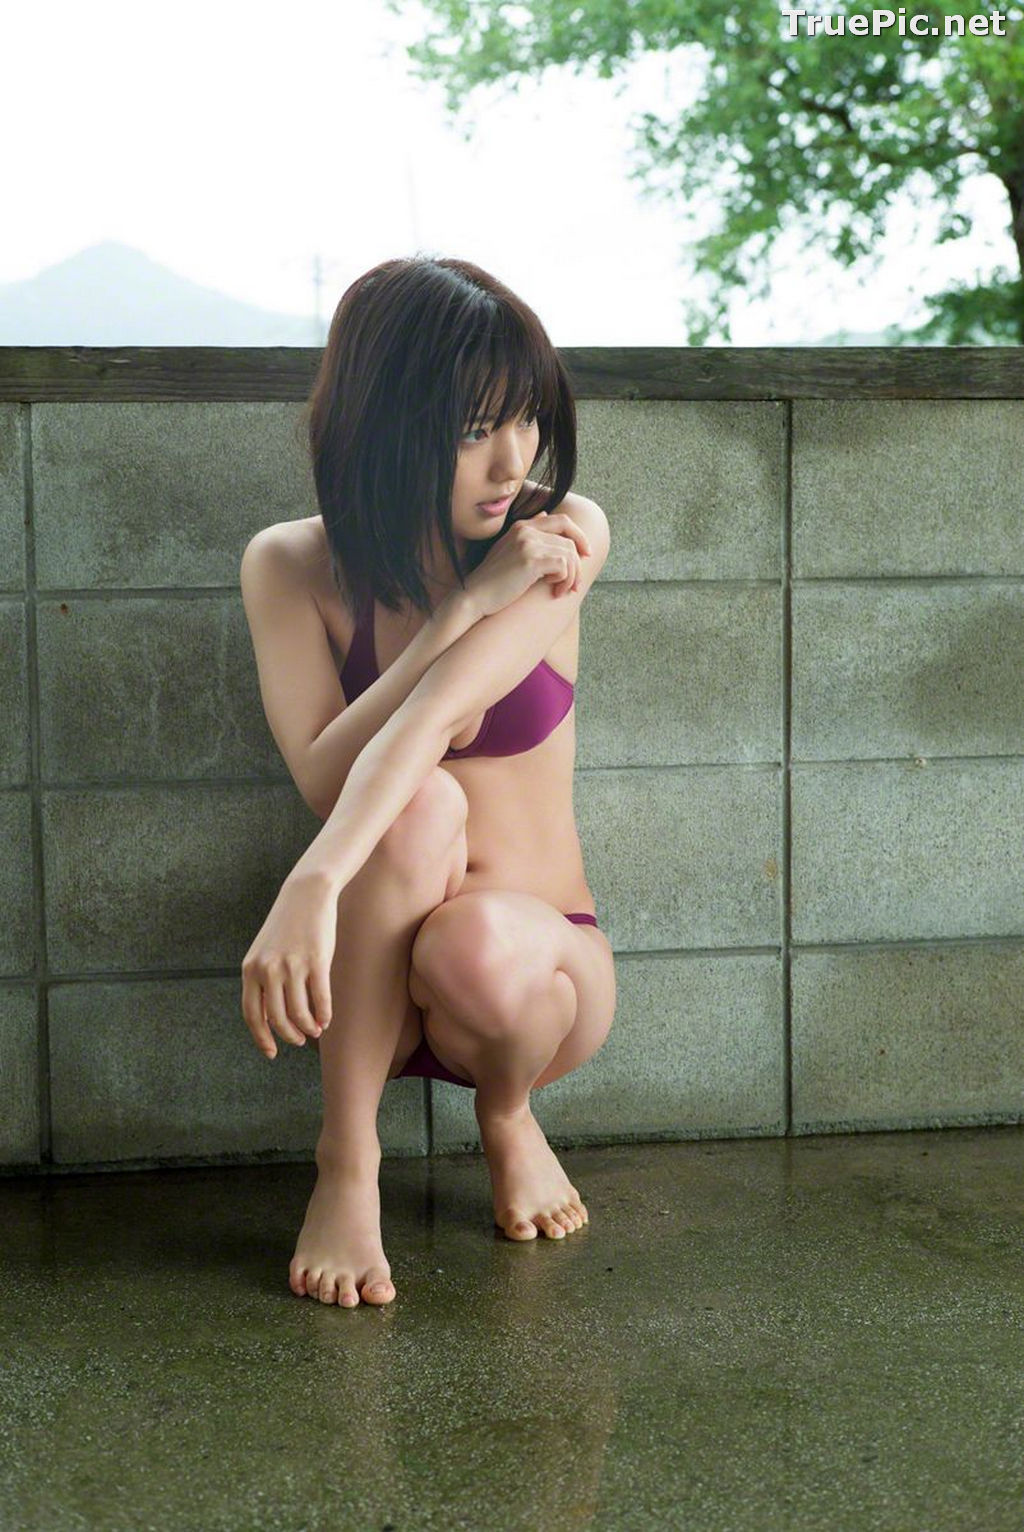 Image Wanibooks No.130 - Japanese Idol Singer and Actress - Erina Mano - TruePic.net - Picture-149